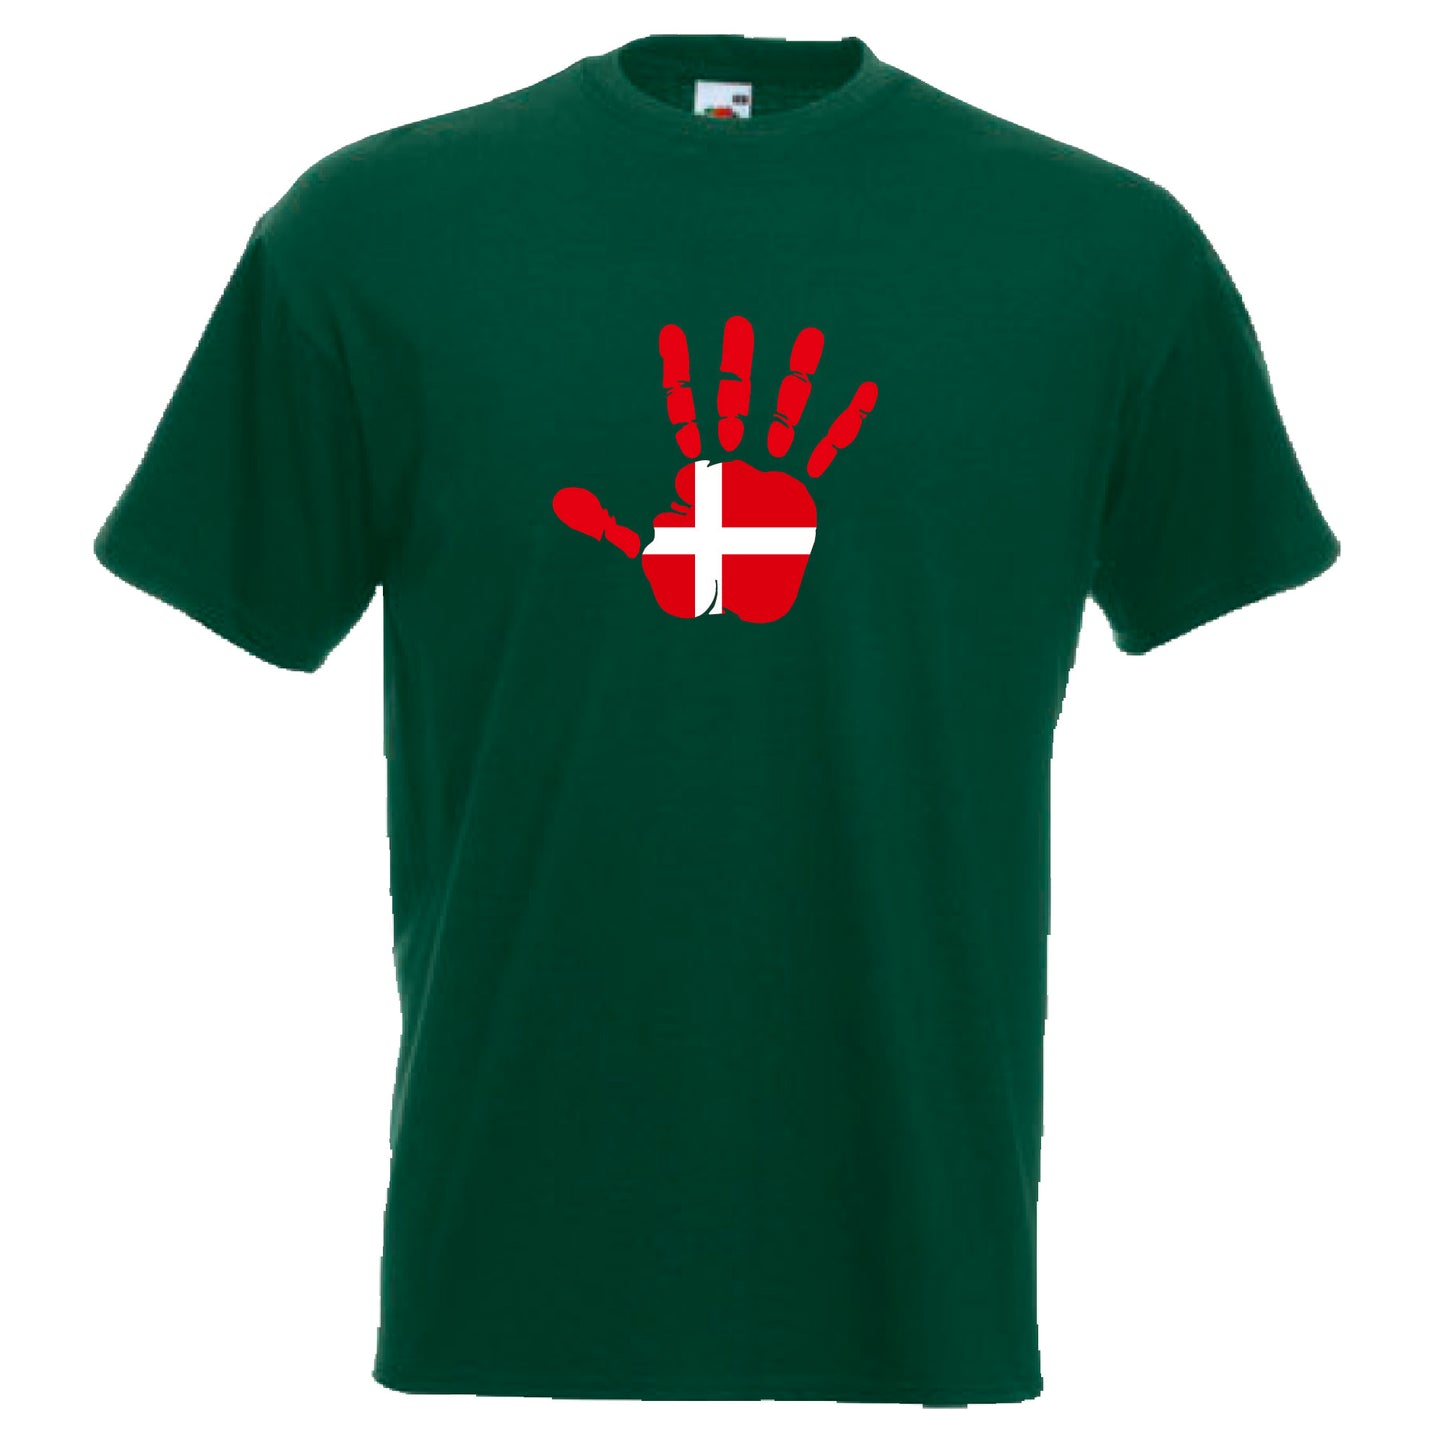 INDIGOS UG - T-Shirt Herren - Dänemark - Hand - Fussball